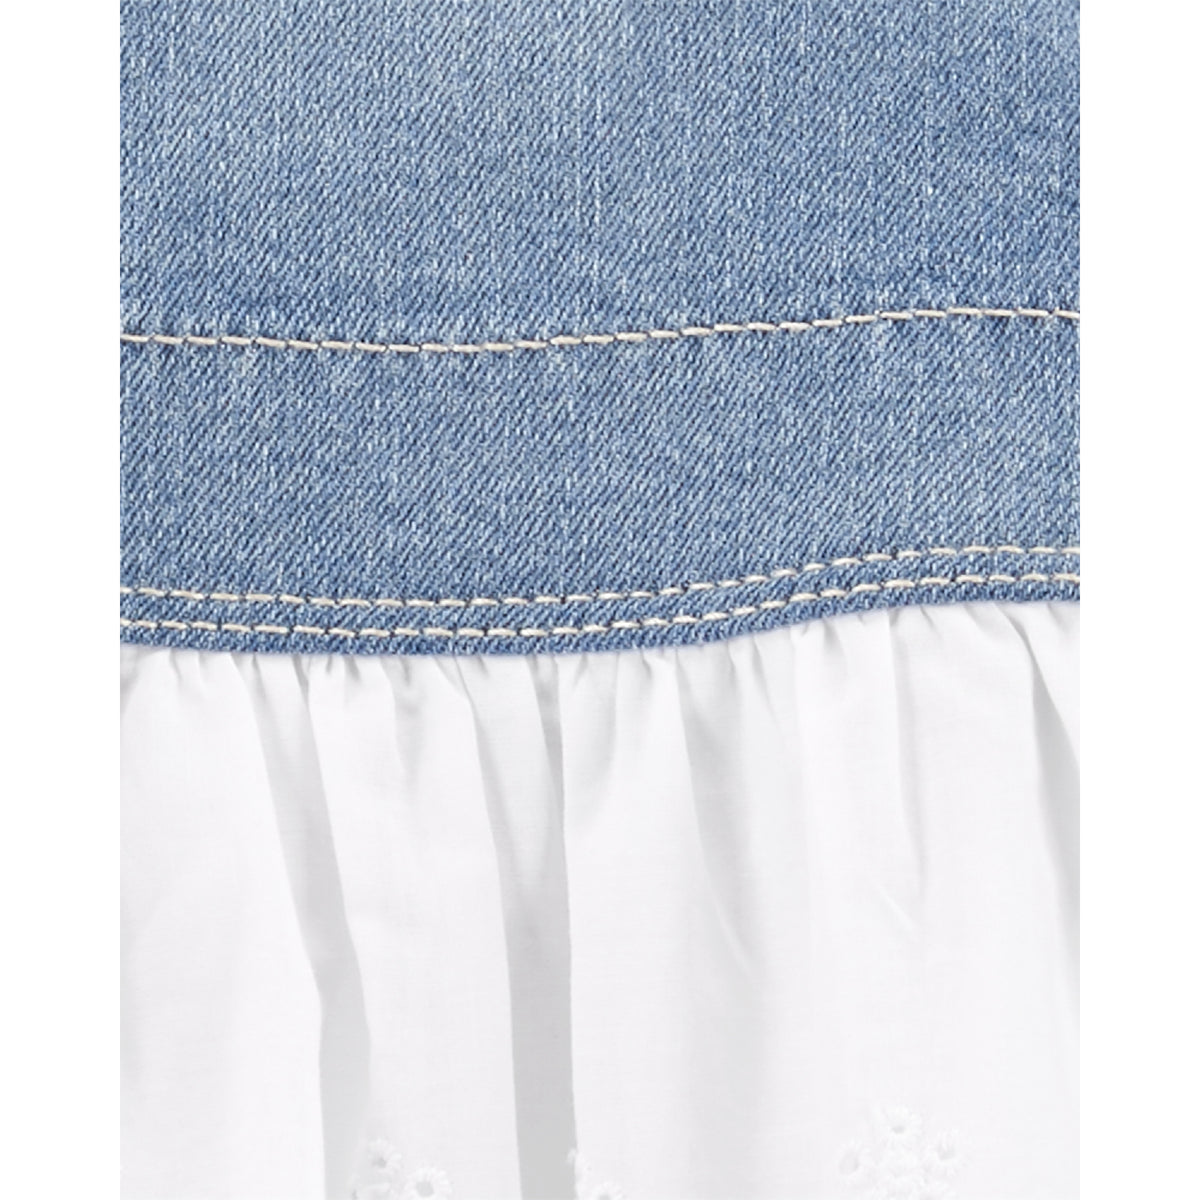 Oshkosh denim patchwork suspender skirt (2T-5T)